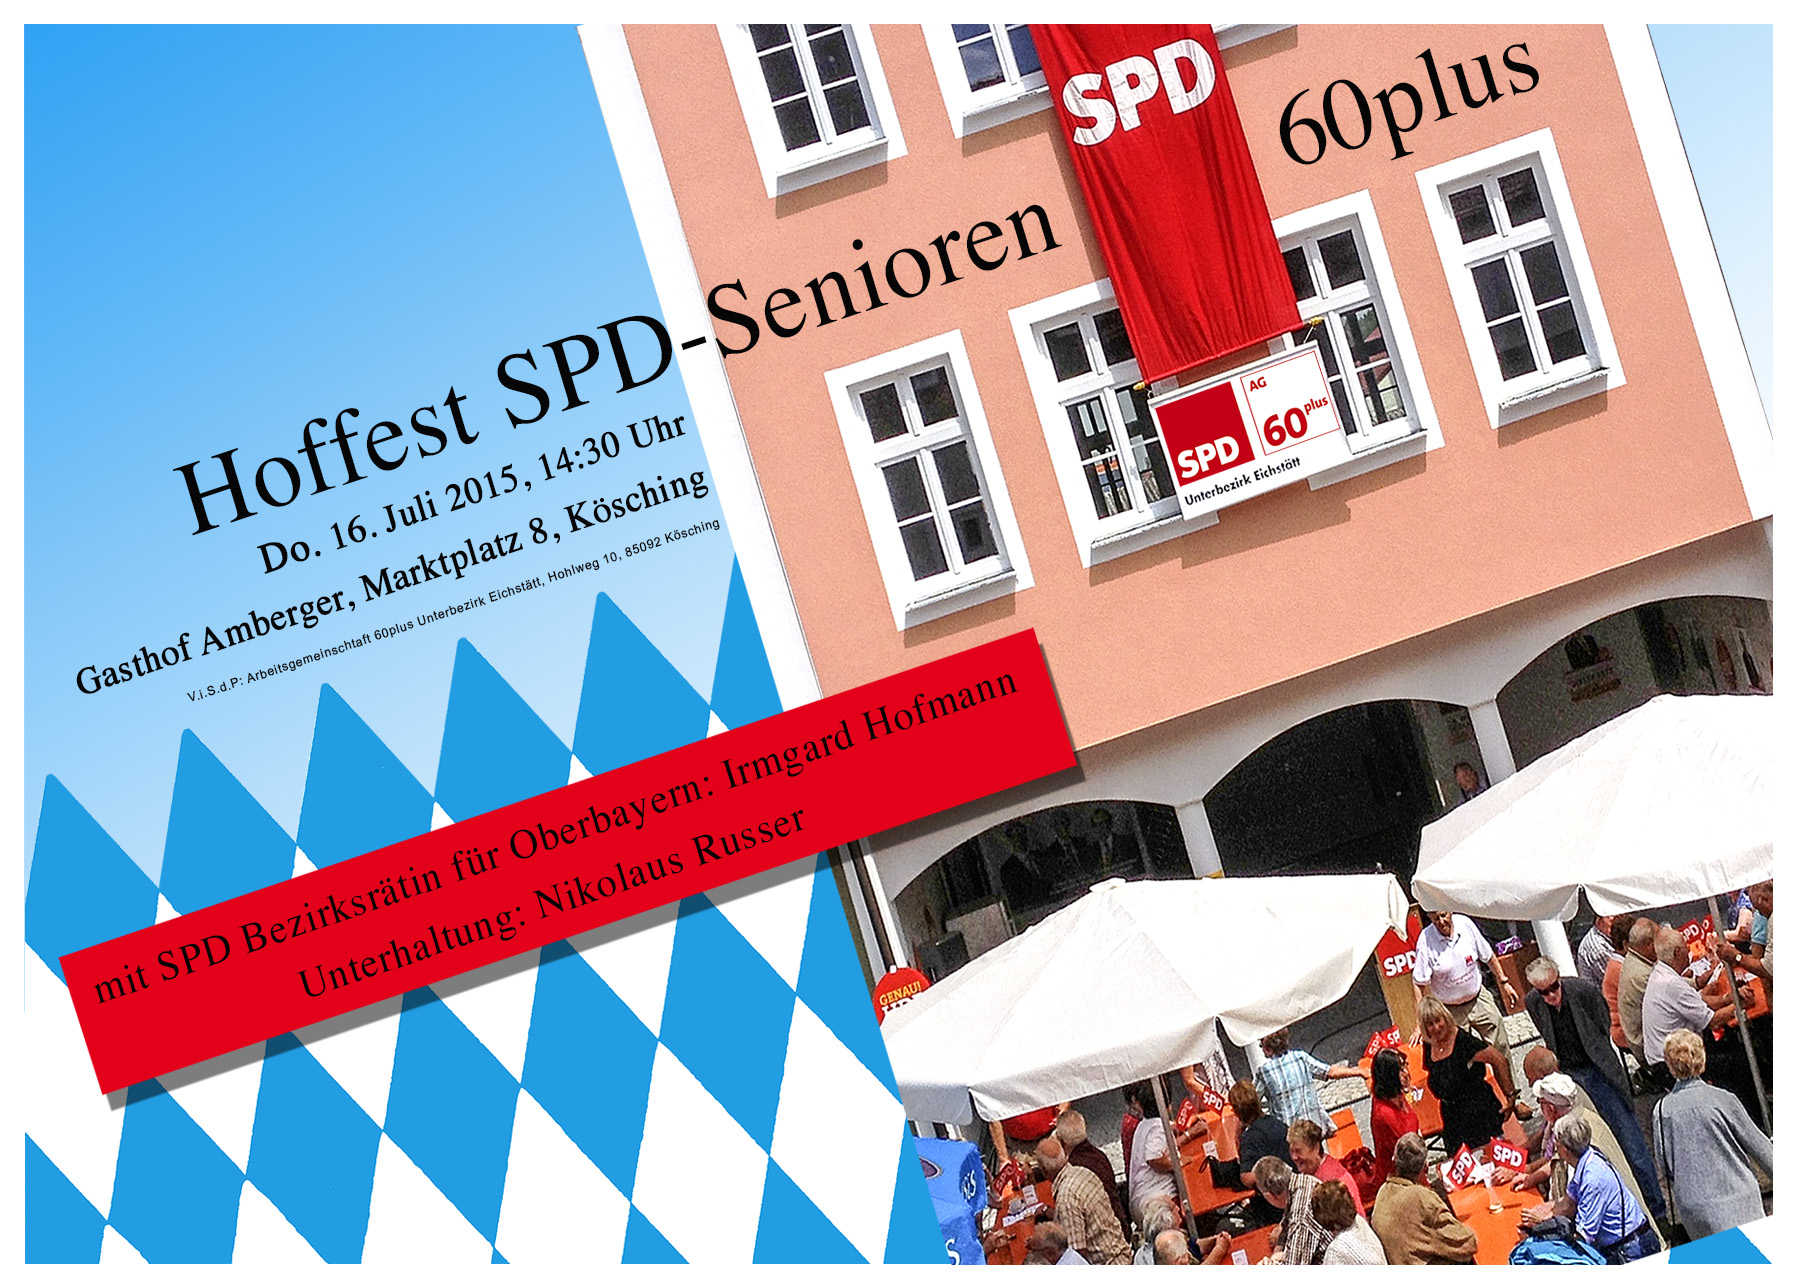 SPD-Senioren feiern Hoffest mit Bezirksrätin Irmgard Hofmann